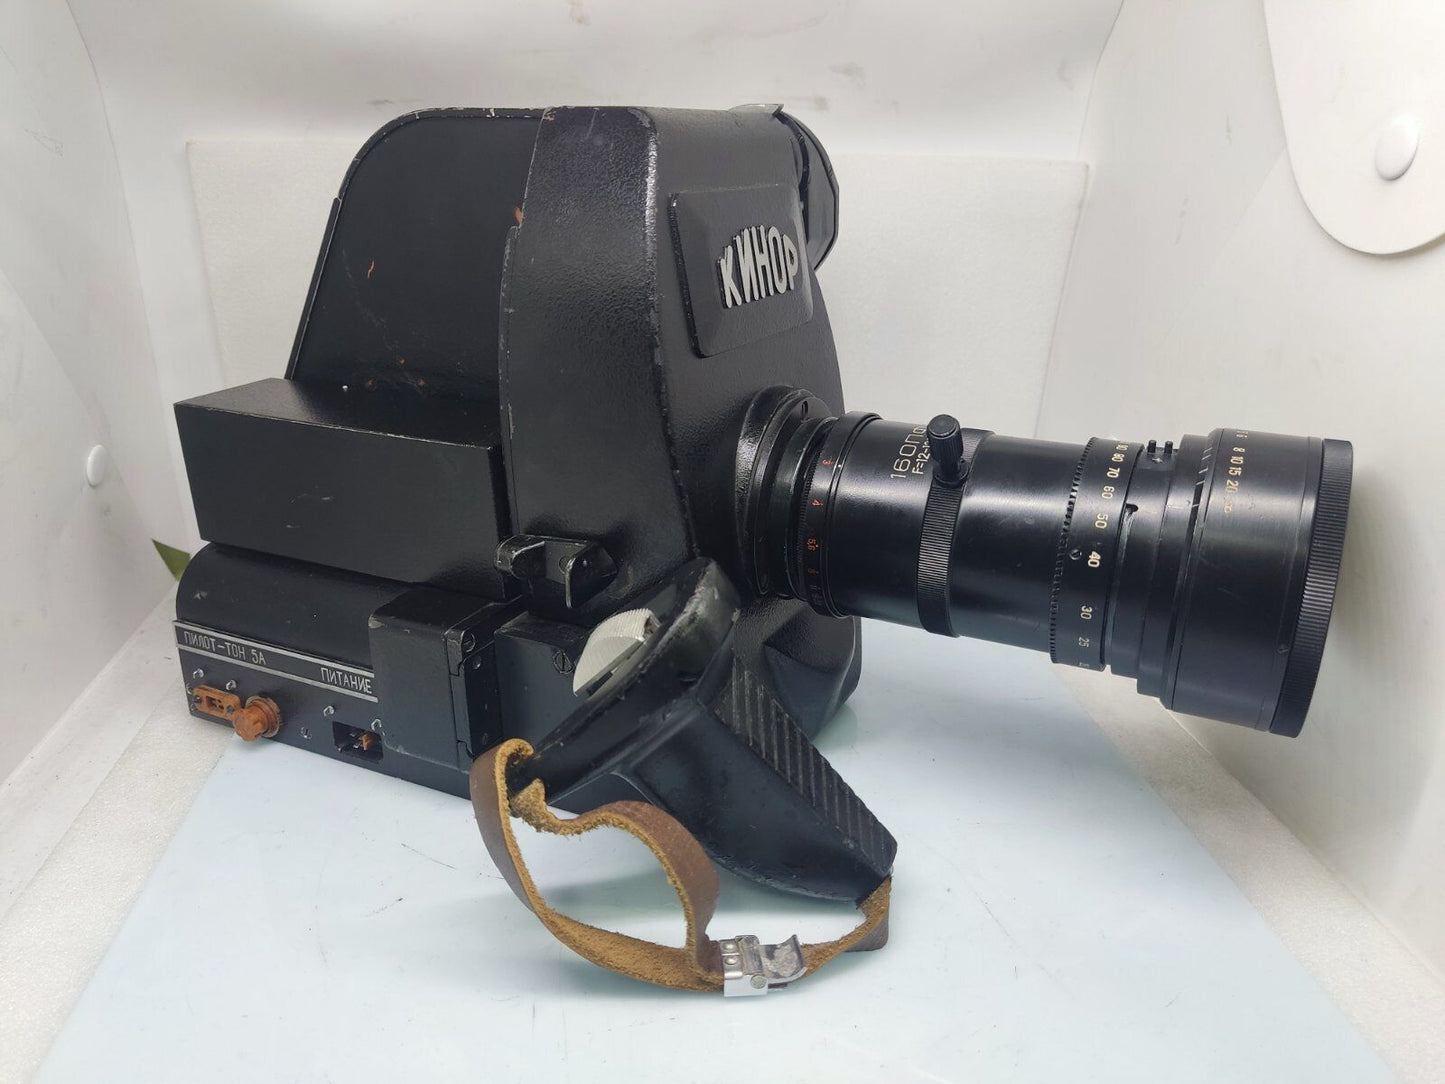 16mm Kinor-16SX-2M Cine Camera, Motor, 2 Magazines, Motor, Lens Good shape